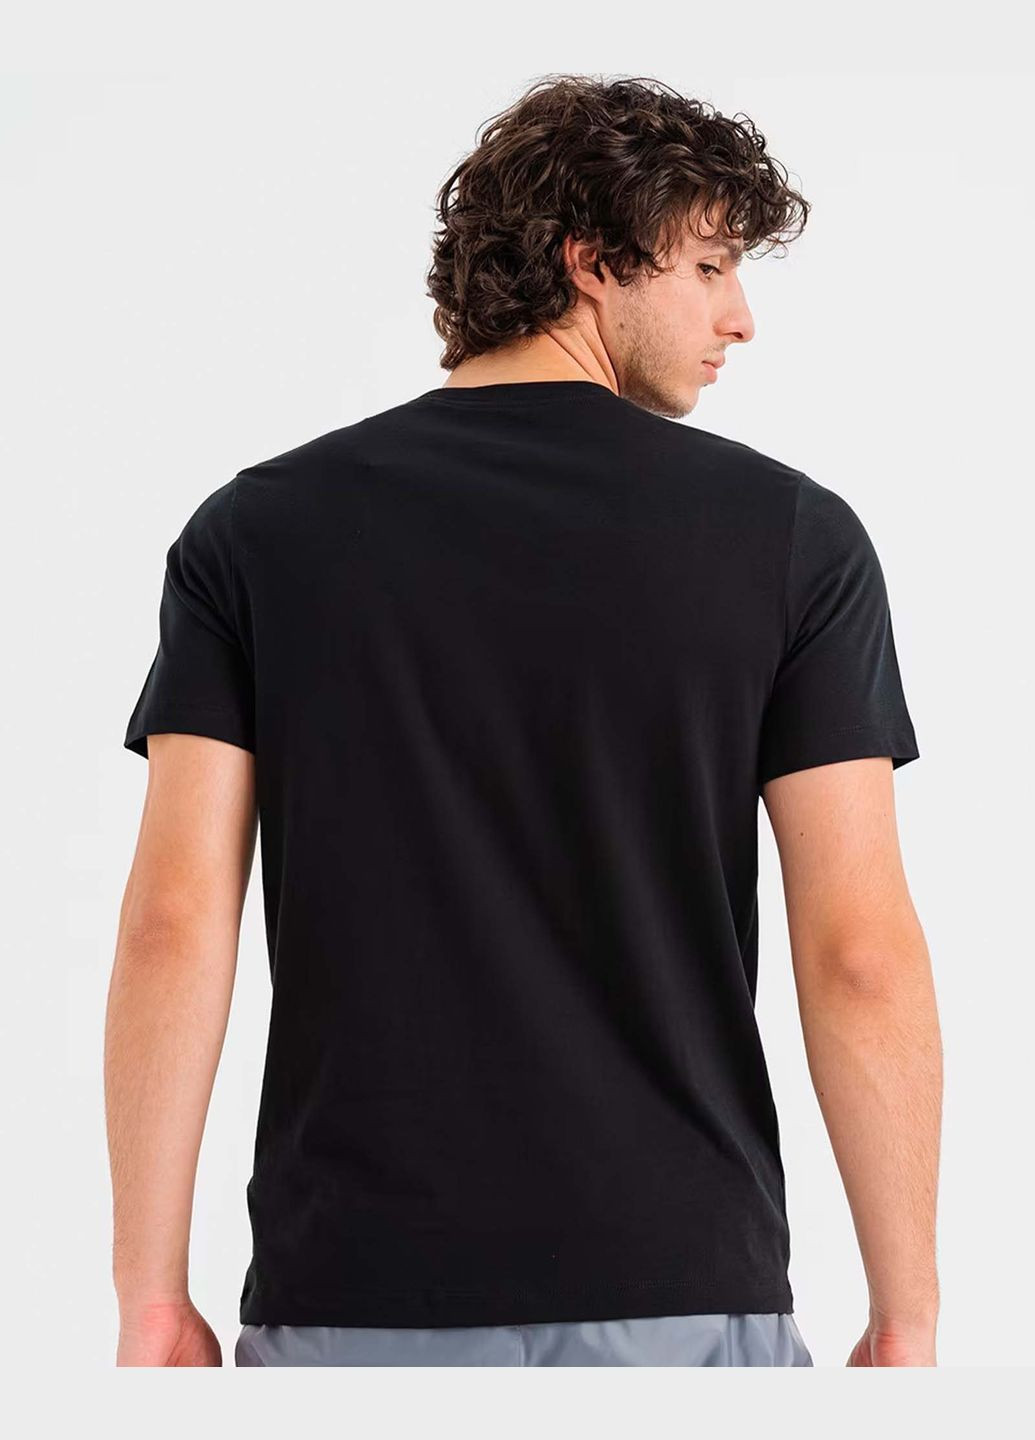 Черная футболка мужская tee 12mo jdi dz2993-010 черная Nike